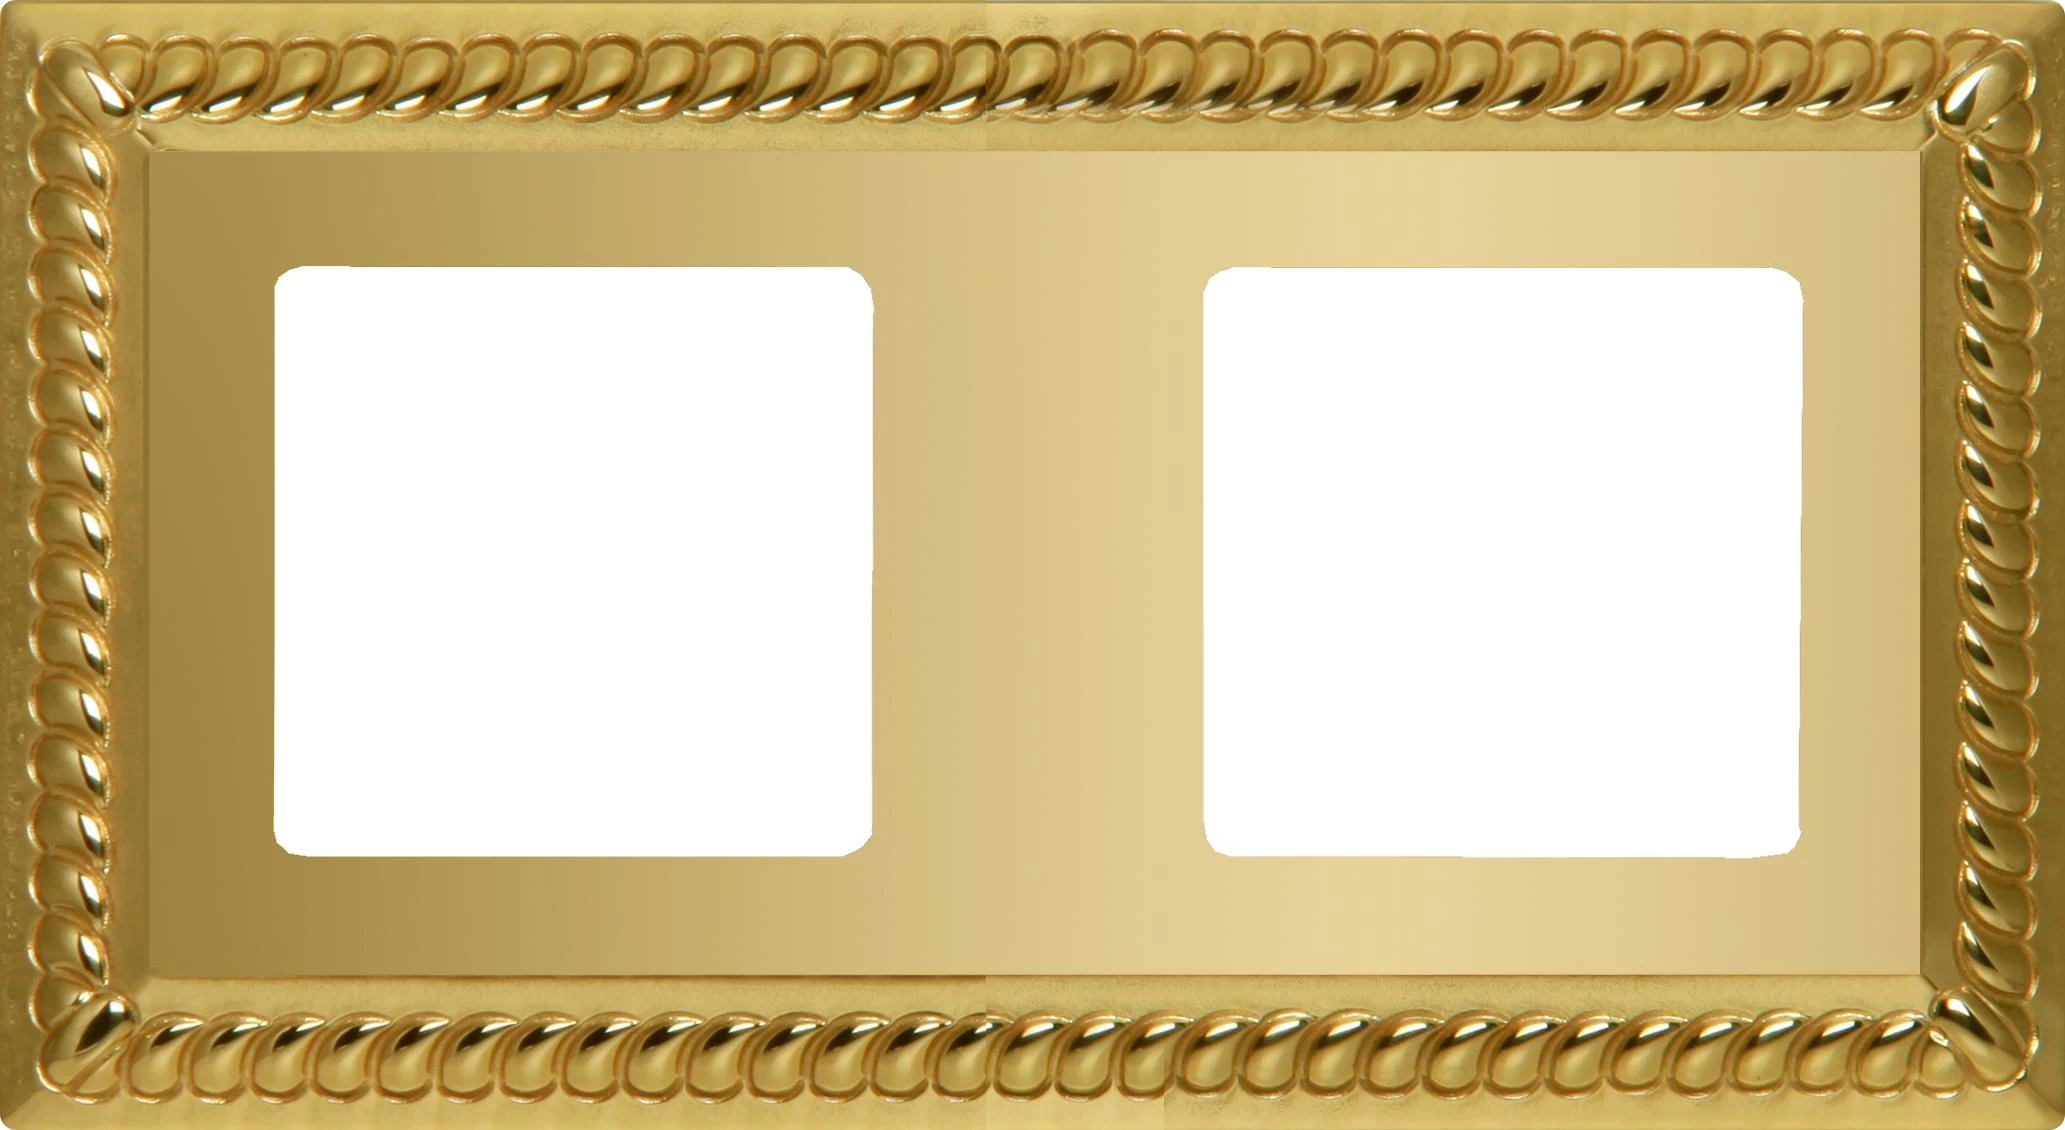  артикул FD01232OB название Рамка 2-ая (двойная), цвет Светлое золото, Sevilla, Fede